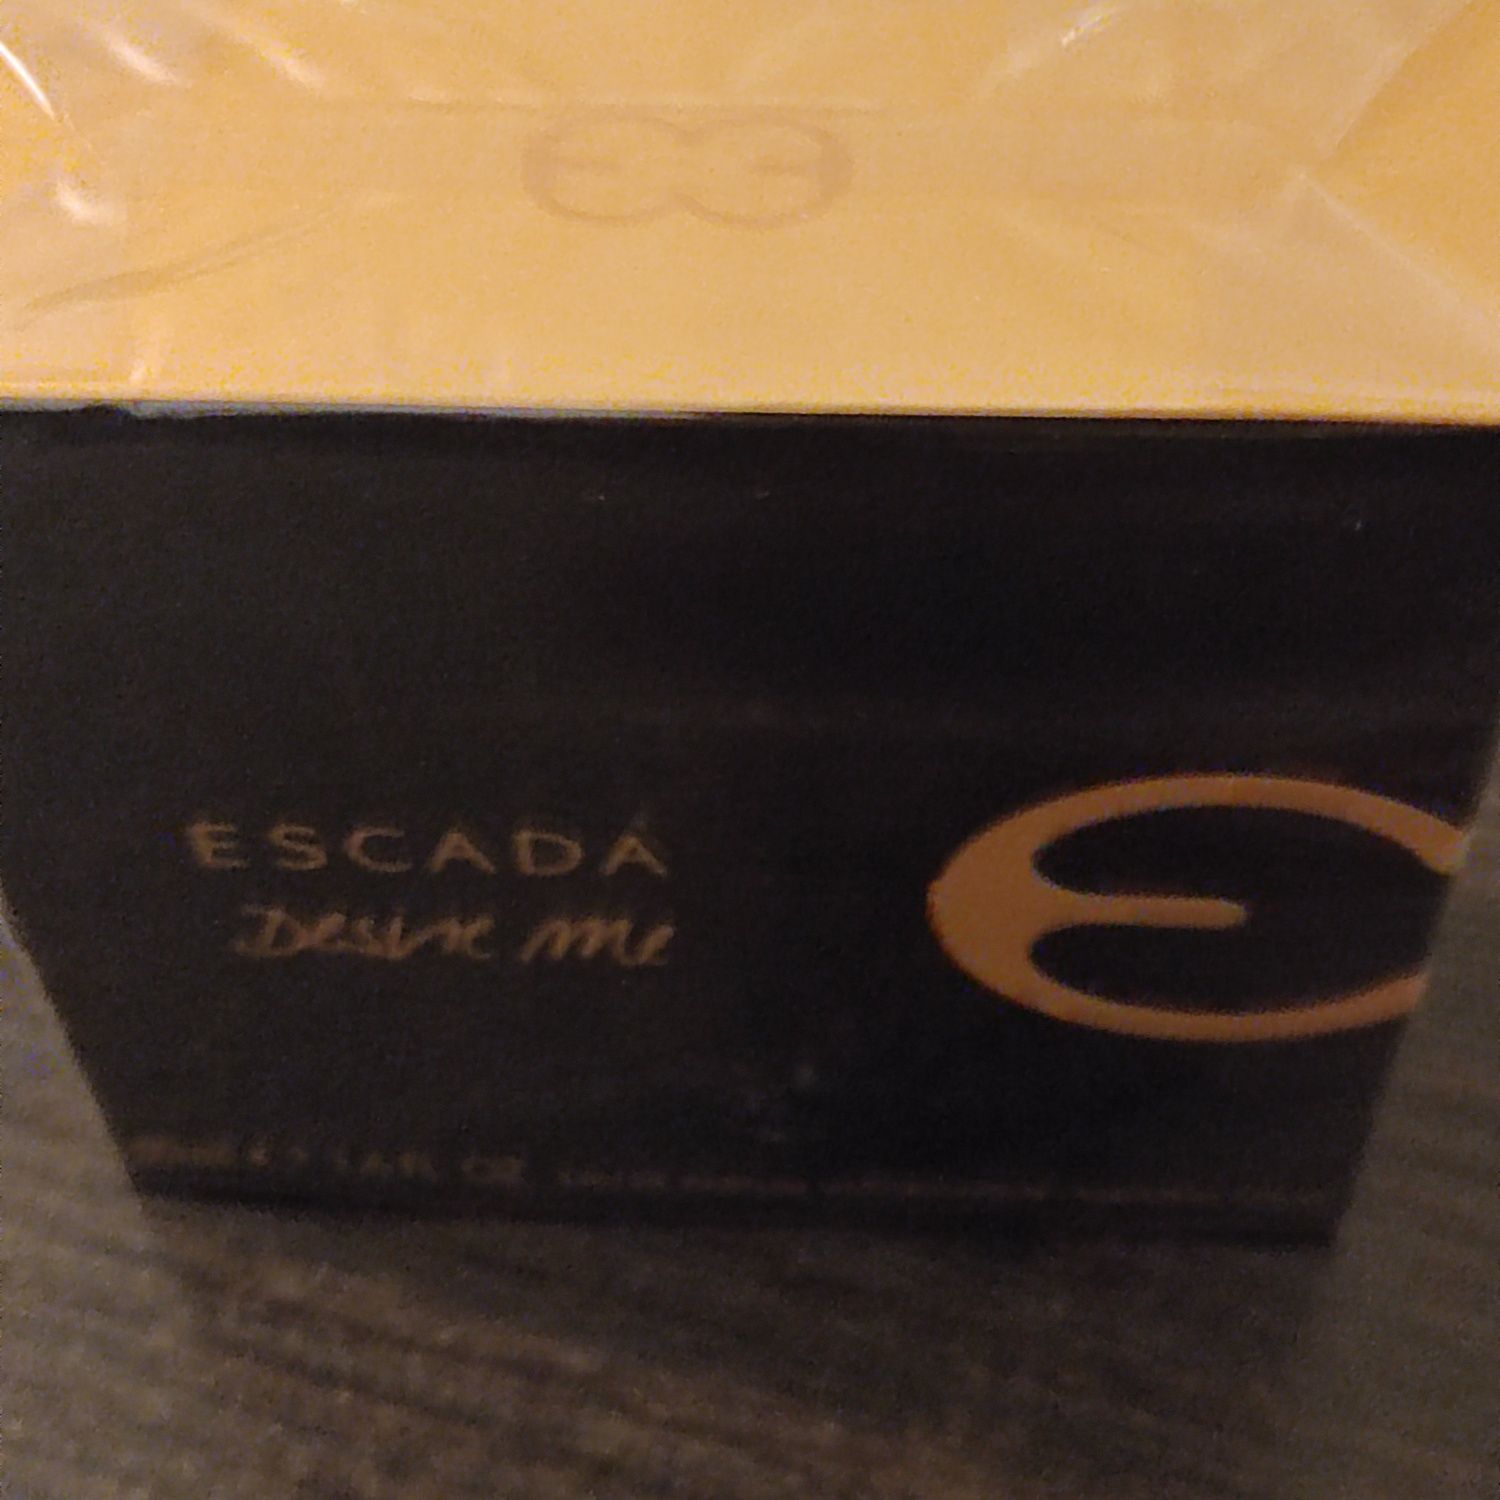 Escada Desire me 50 ml EDP nowe unikat oryginał